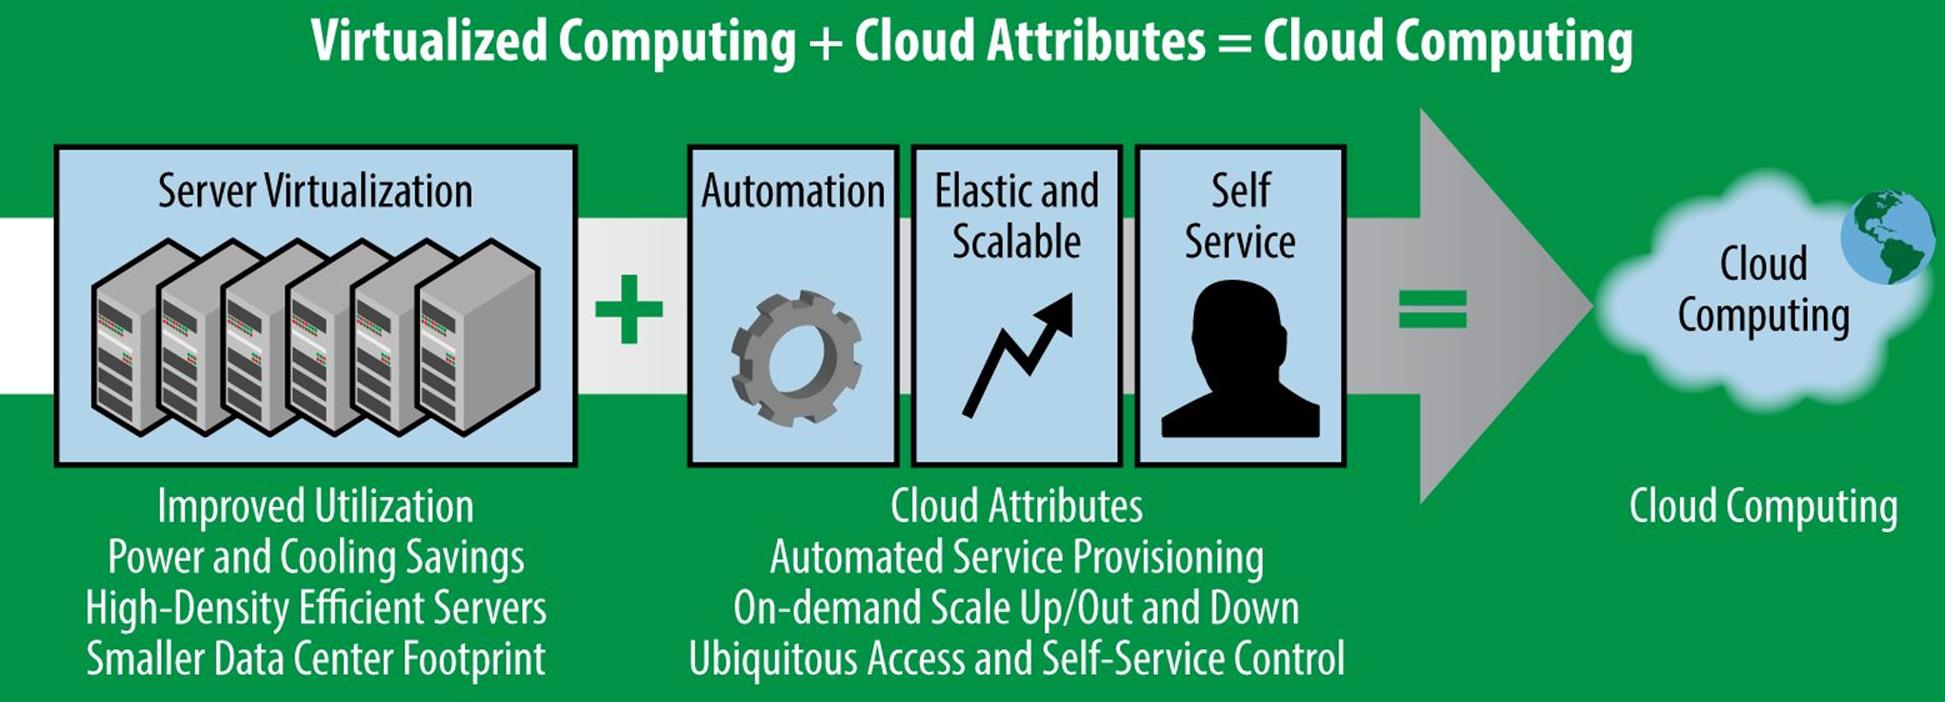 Virtualization + cloud attributes = cloud computing